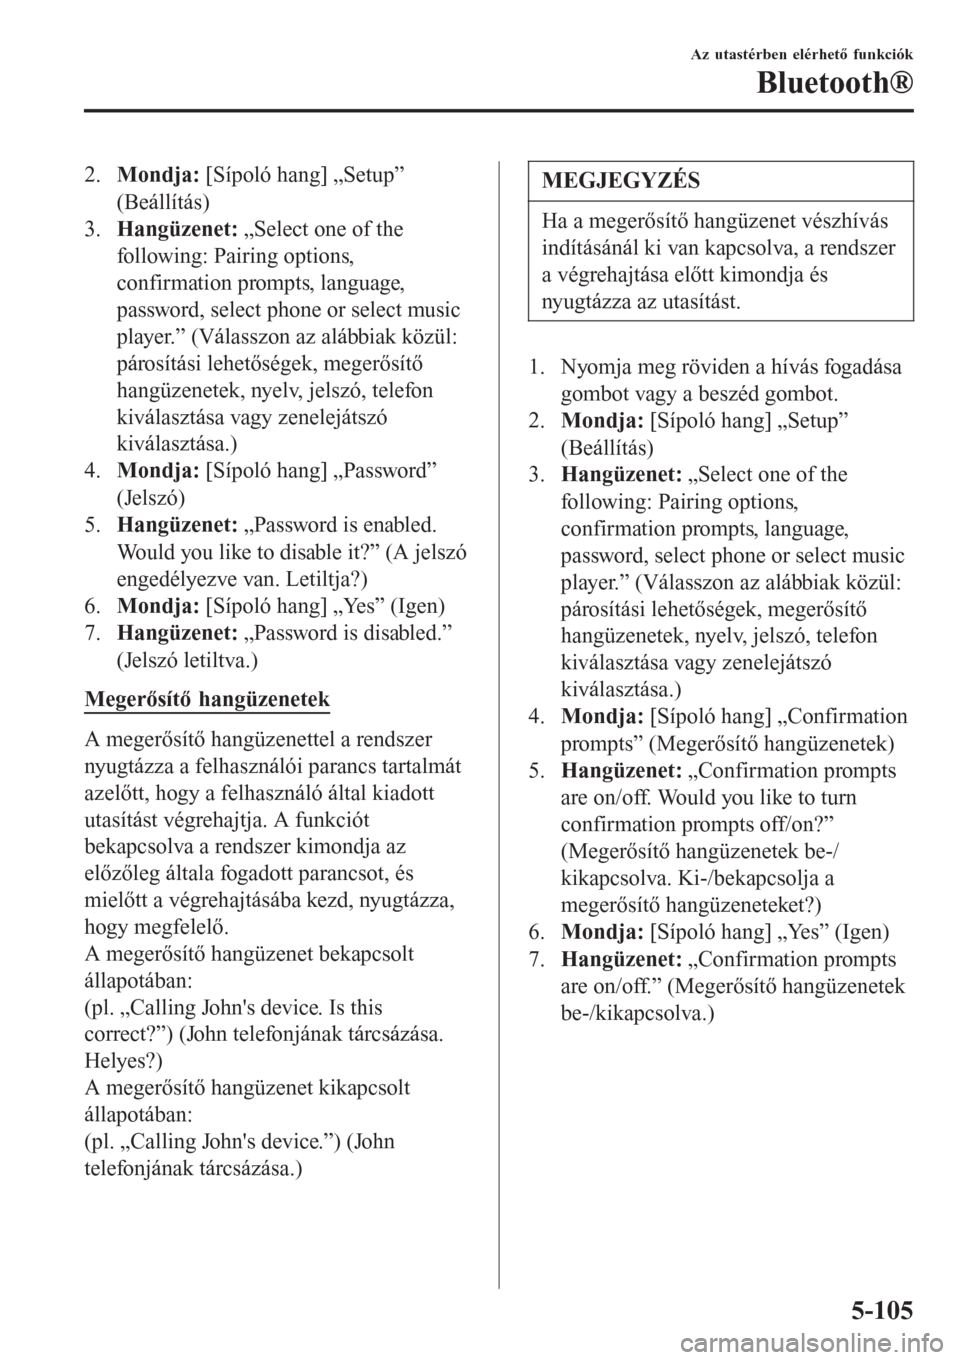 MAZDA MODEL CX-3 2015  Kezelési útmutató (in Hungarian) 2.Mondja: [Sípoló hang] „Setup”
(Beállítás)
3.Hangüzenet: „Select one of the
following: Pairing options,
confirmation prompts, language,
password, select phone or select music
player.” (